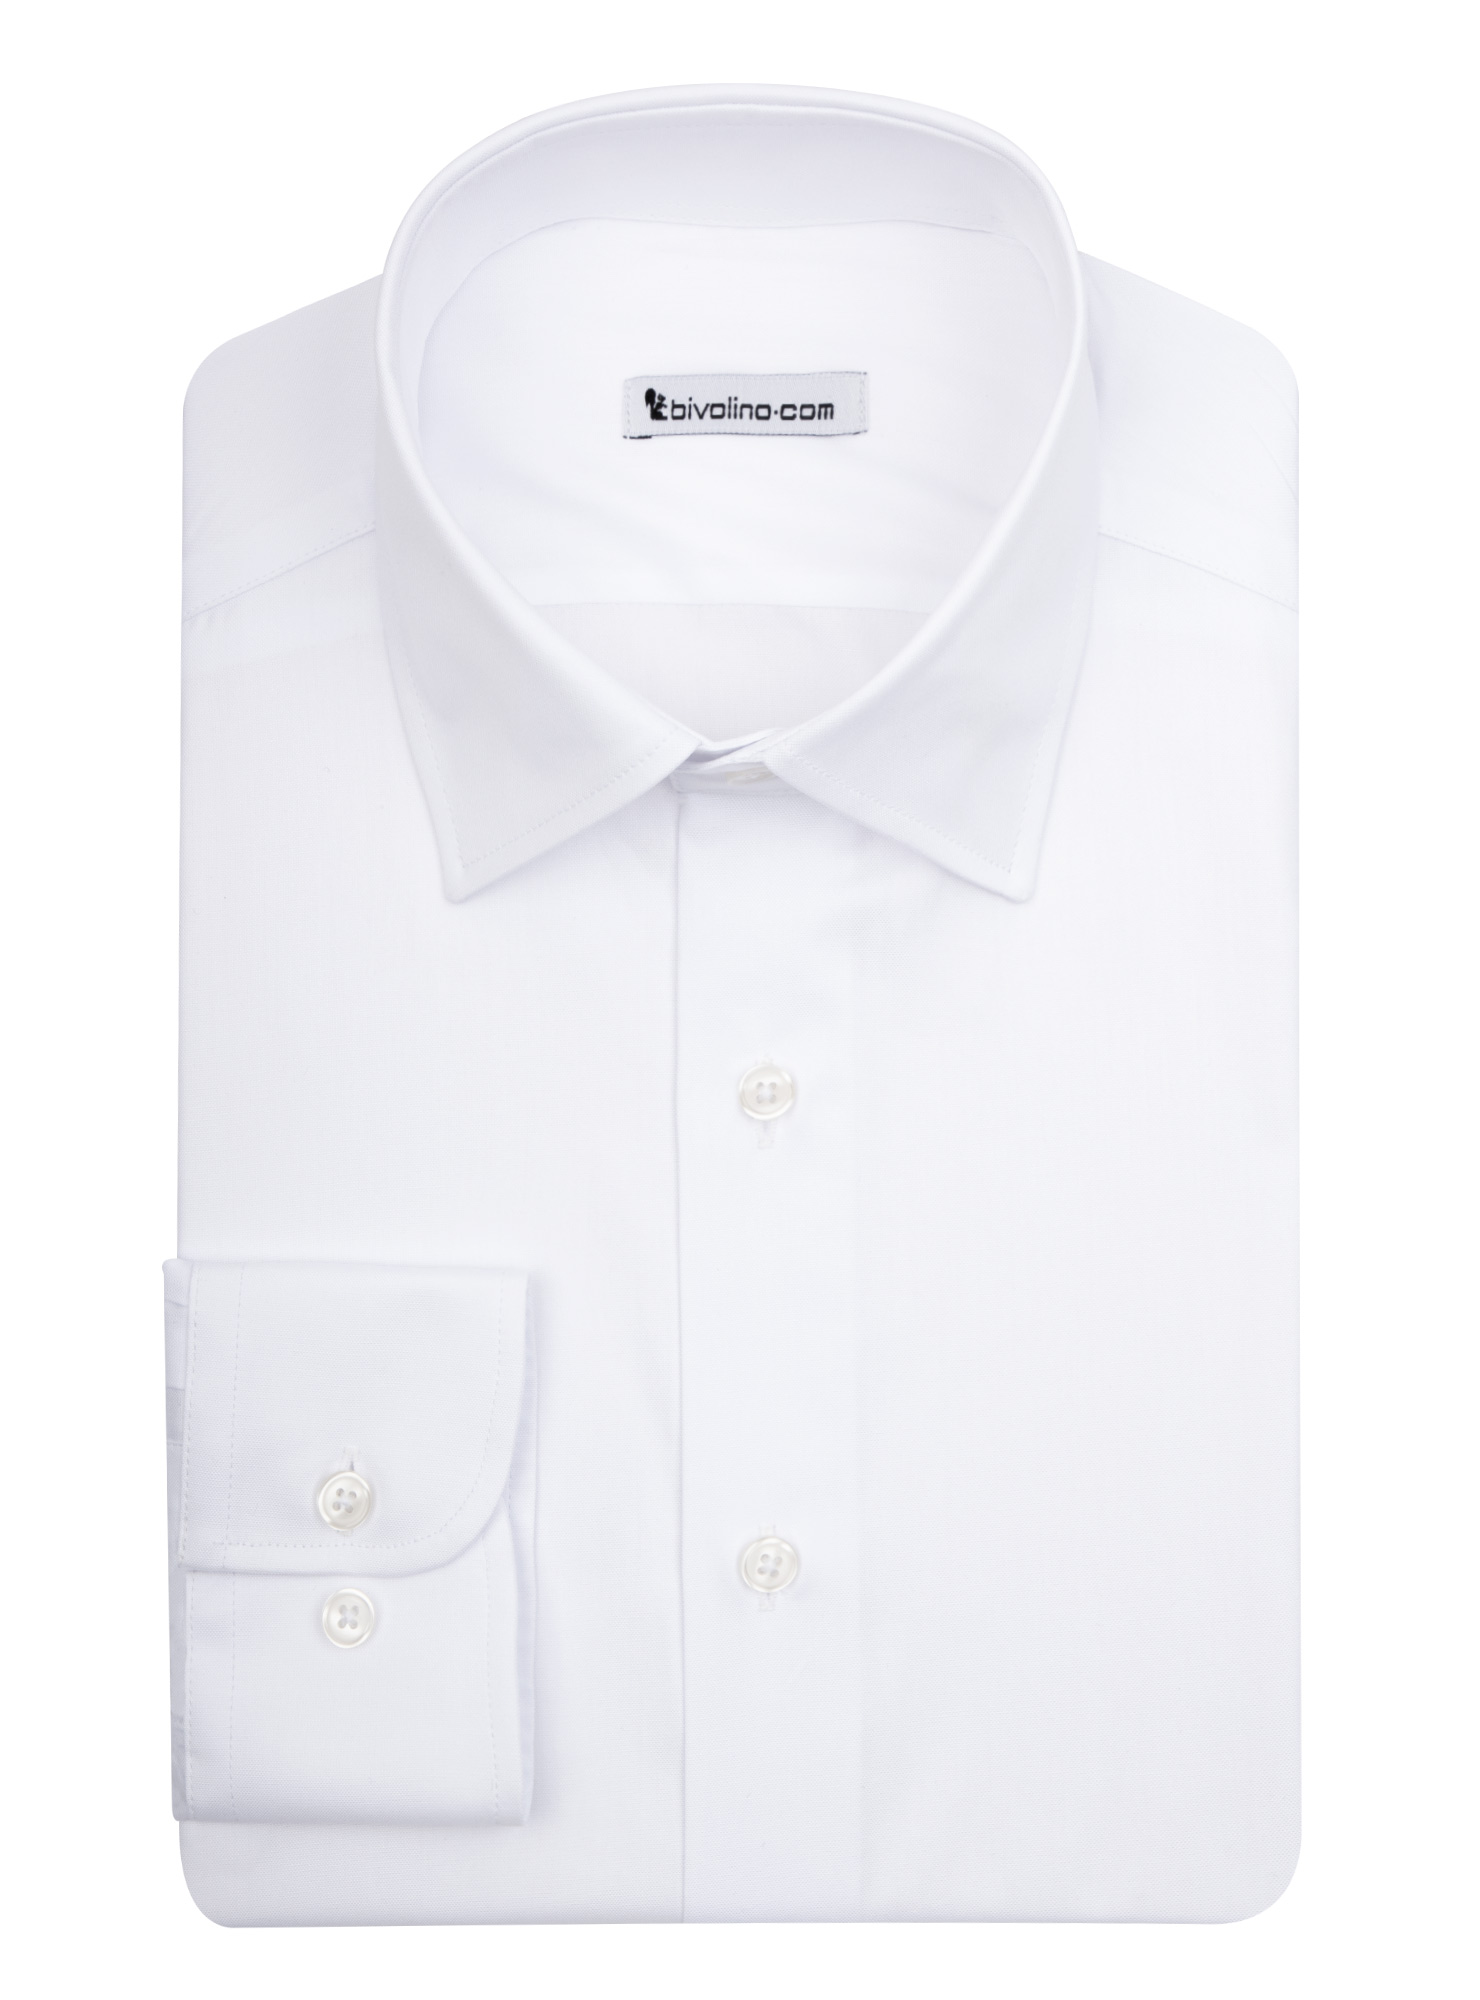 TURIN - PinPoint Blanco camisa - KIWI 1